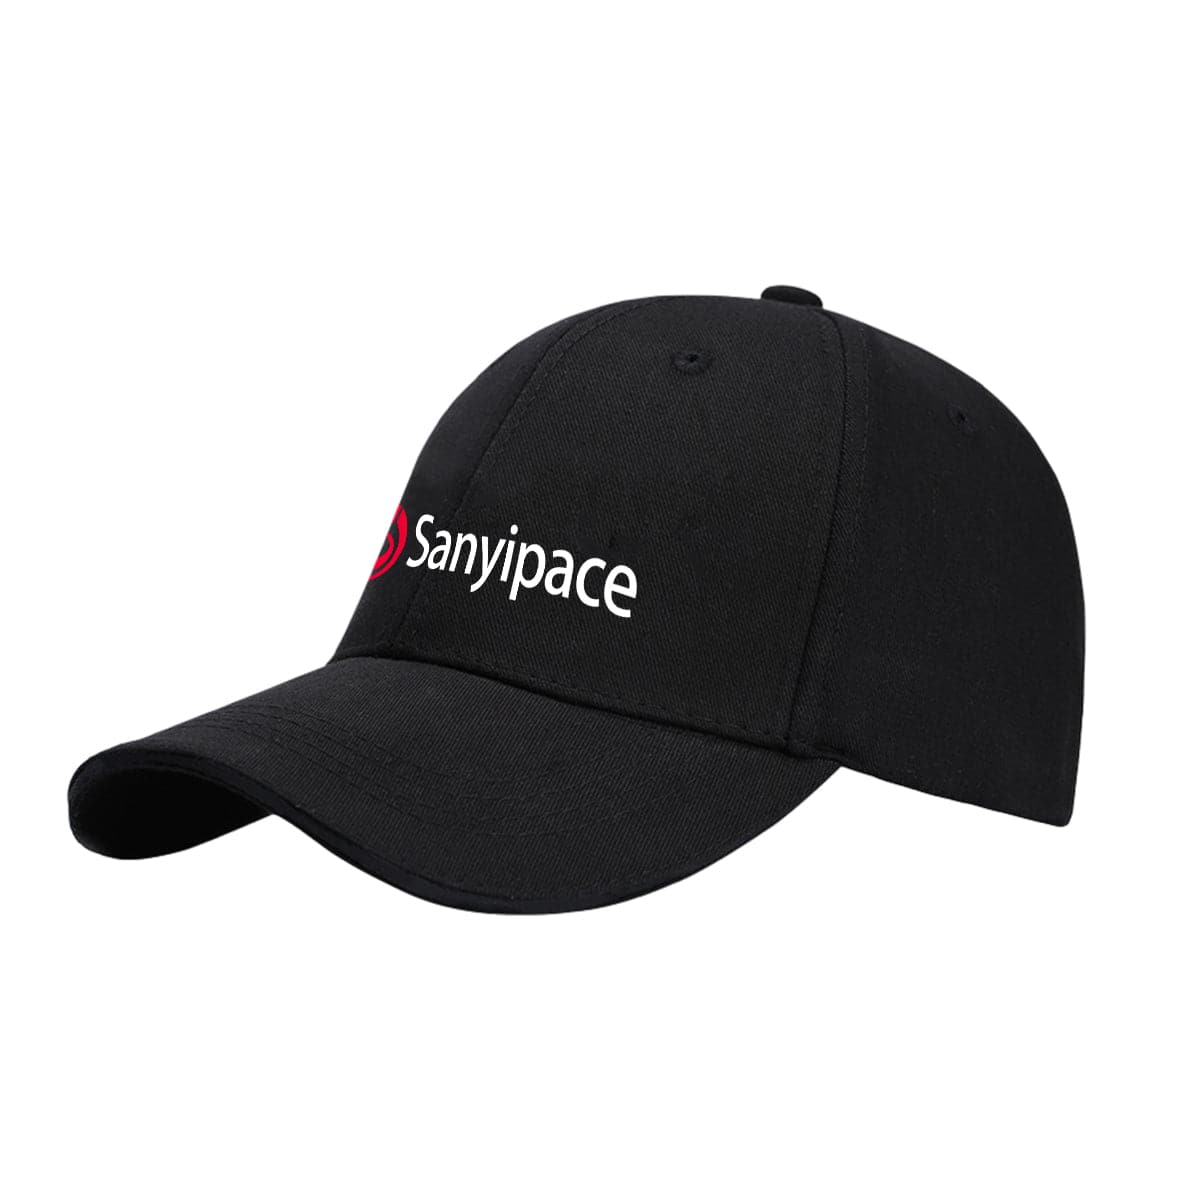 Sanyipace Caps